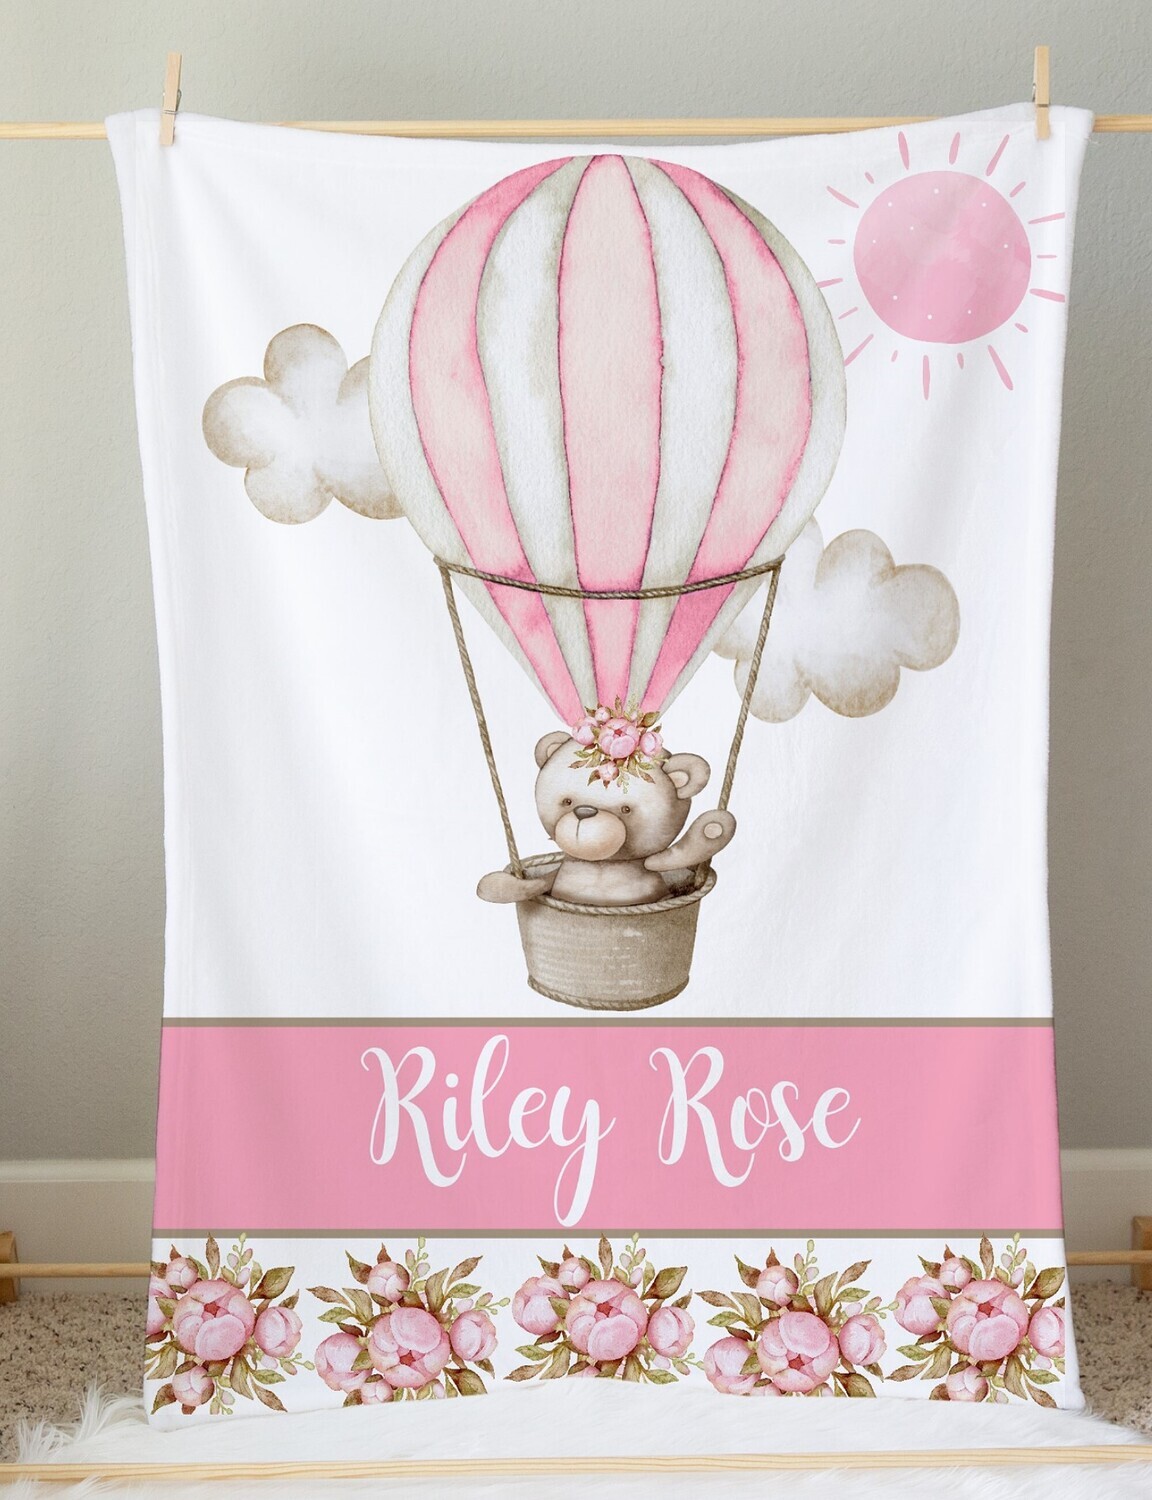 Personalized Baby Girl Blanket Pink Teddy Bear Balloons Nursery Decor New Baby Shower Gift Crib Blanket